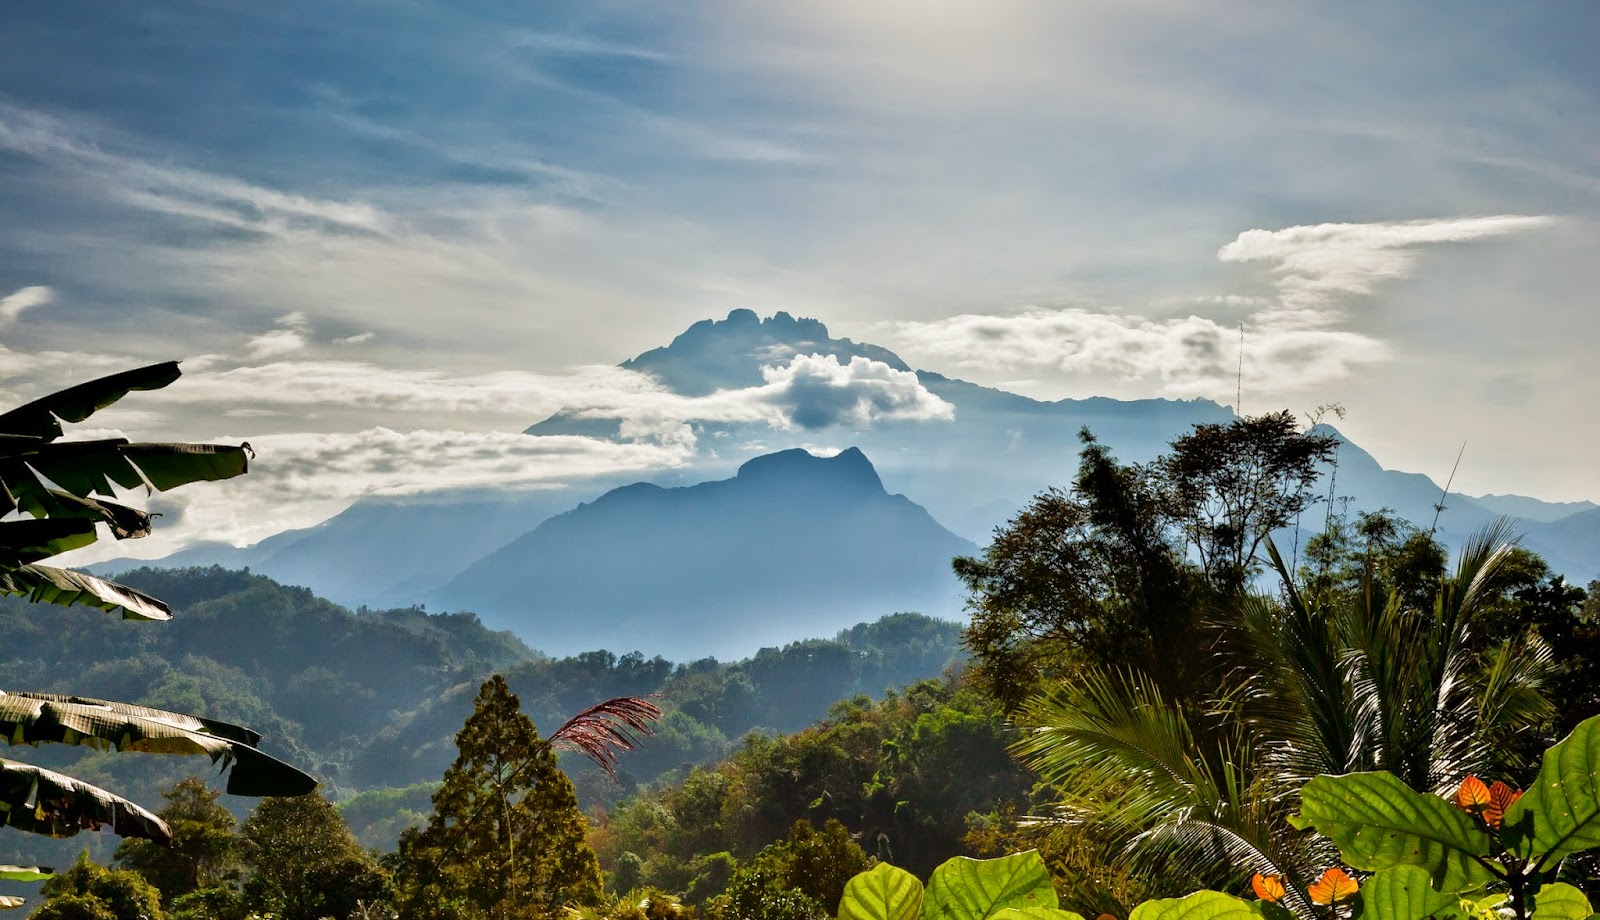 5-five-5: Mount Kinabalu (Kota Belud - Malaysia)